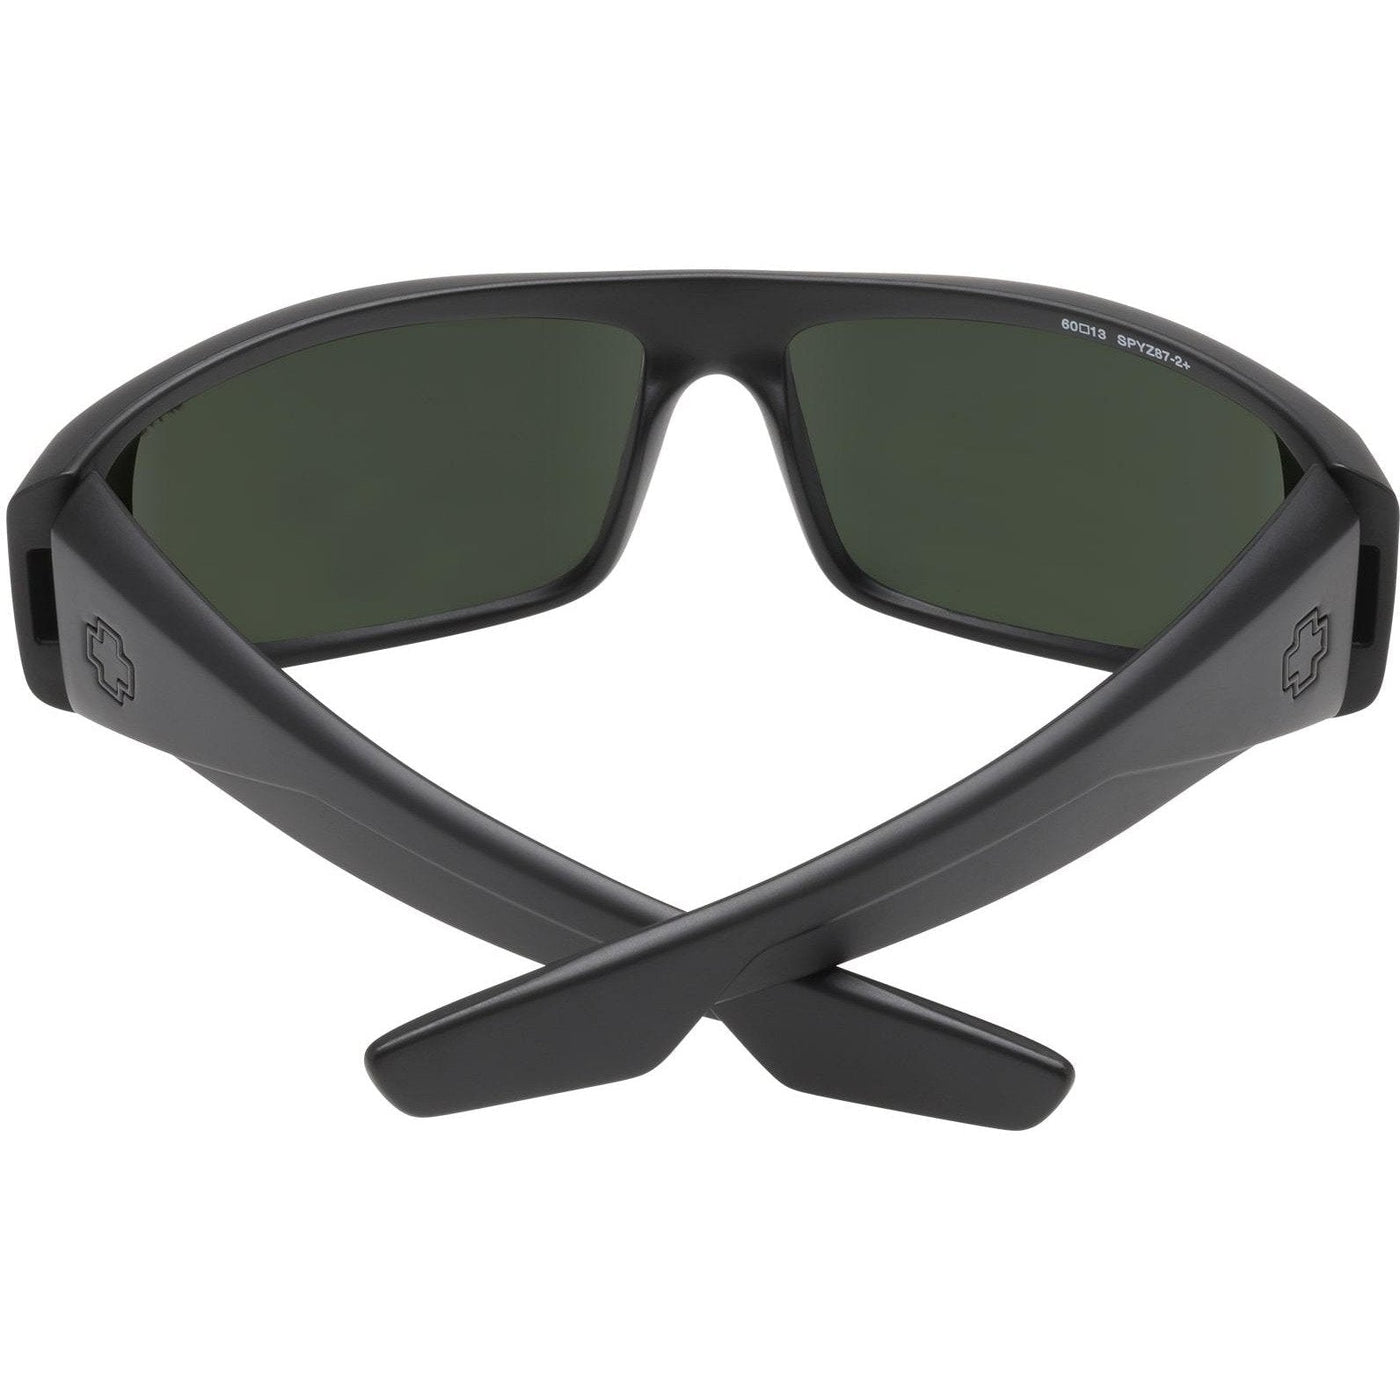 SPY LOGAN ANSI Approved Sunglasses - SOSI Matte Black 8Lines Shop - Fast Shipping